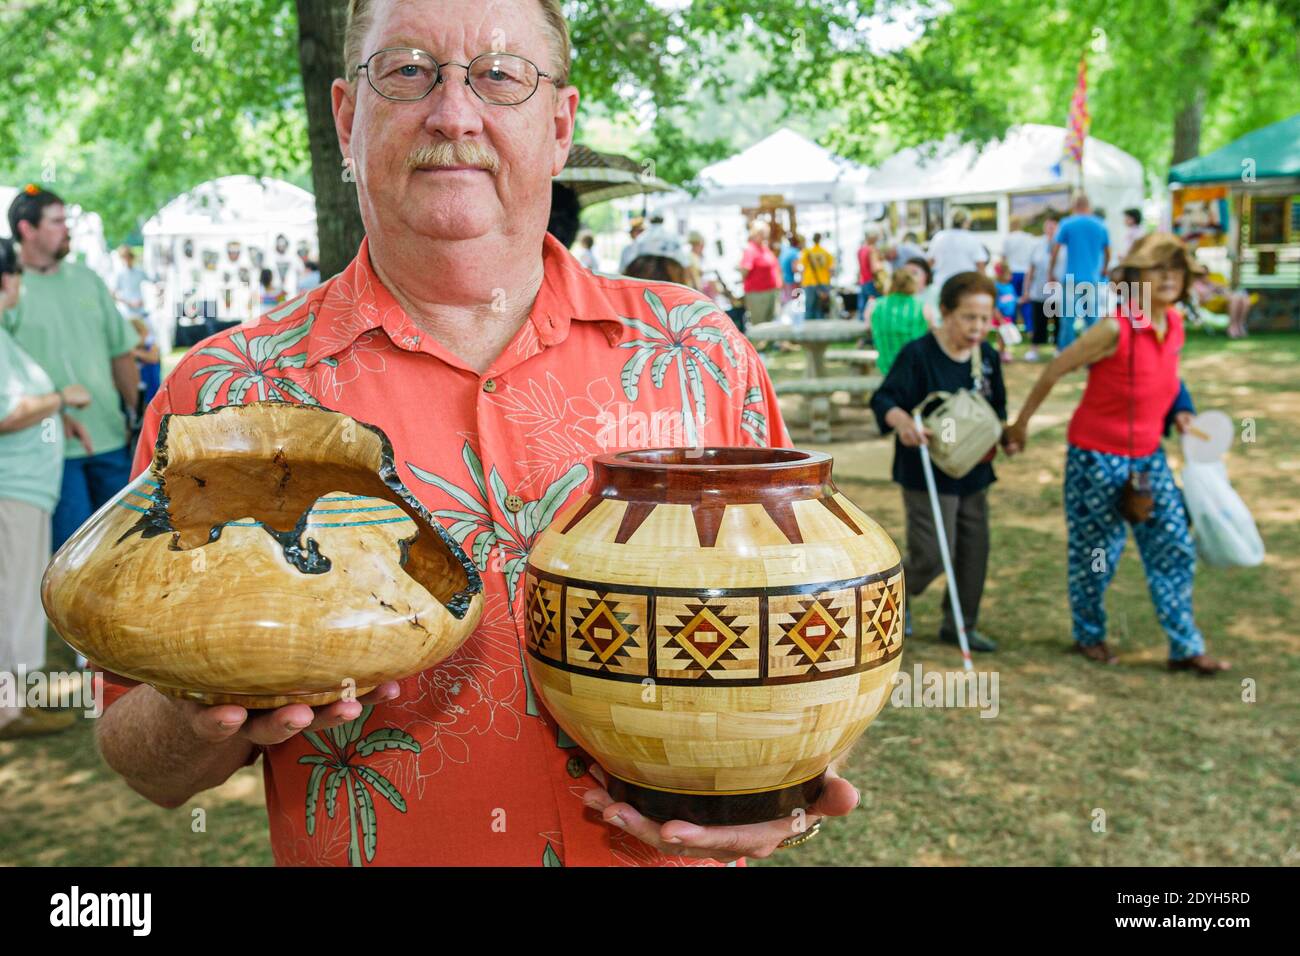 Alabama Tuscumbia Spring Park Helen Keller Festival of the Arts,artist Charles Beams wood turnings bowls vendor, Stock Photo